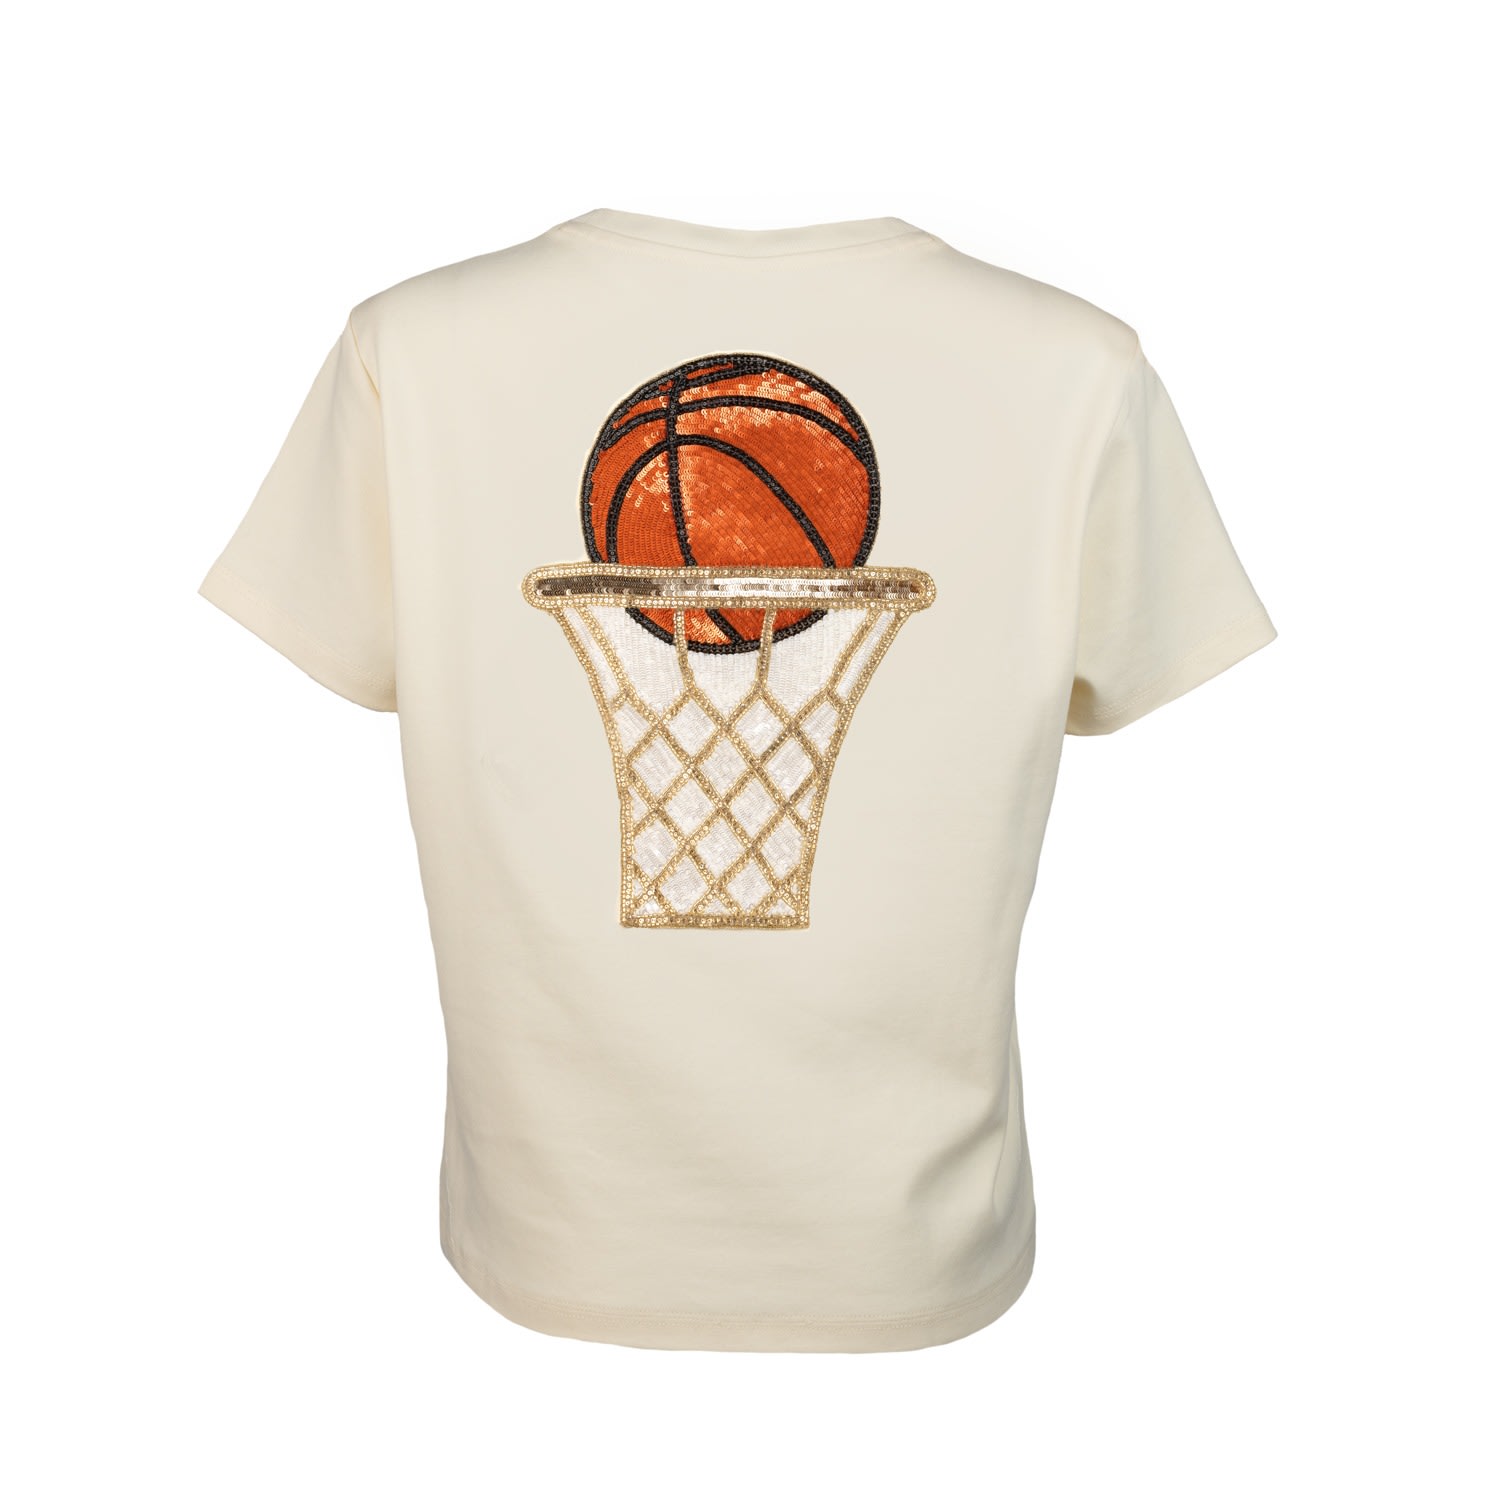 Laines London Women's White Embellished Basketball T-shirt - Cream In Orange